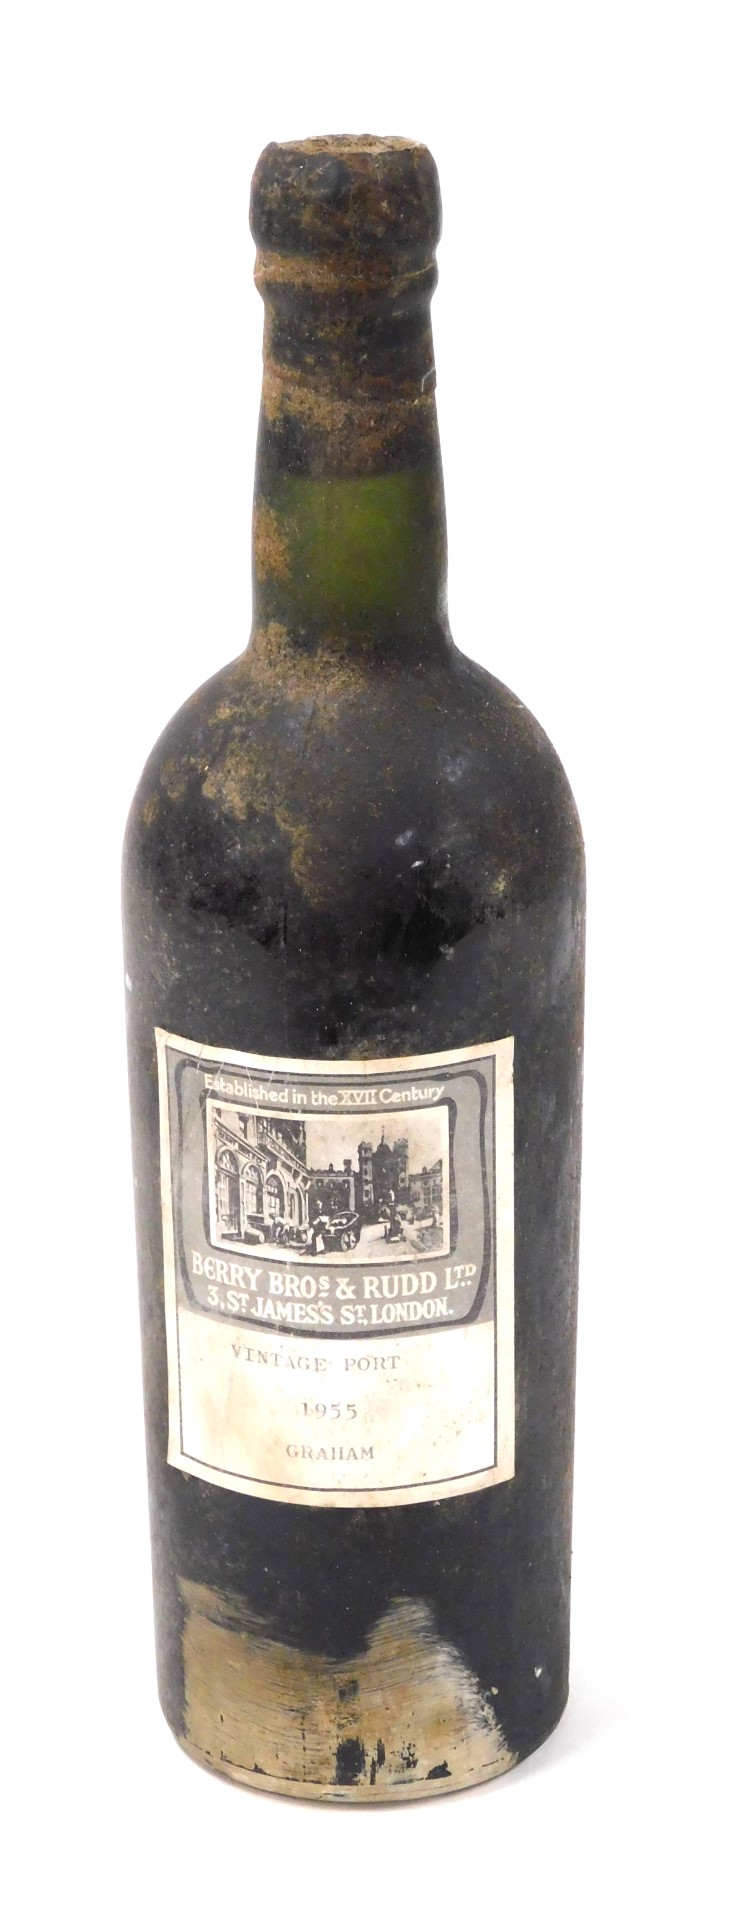 A bottle of vintage port, for Berry Bros & Rudd Ltd, named as Graham 1955.